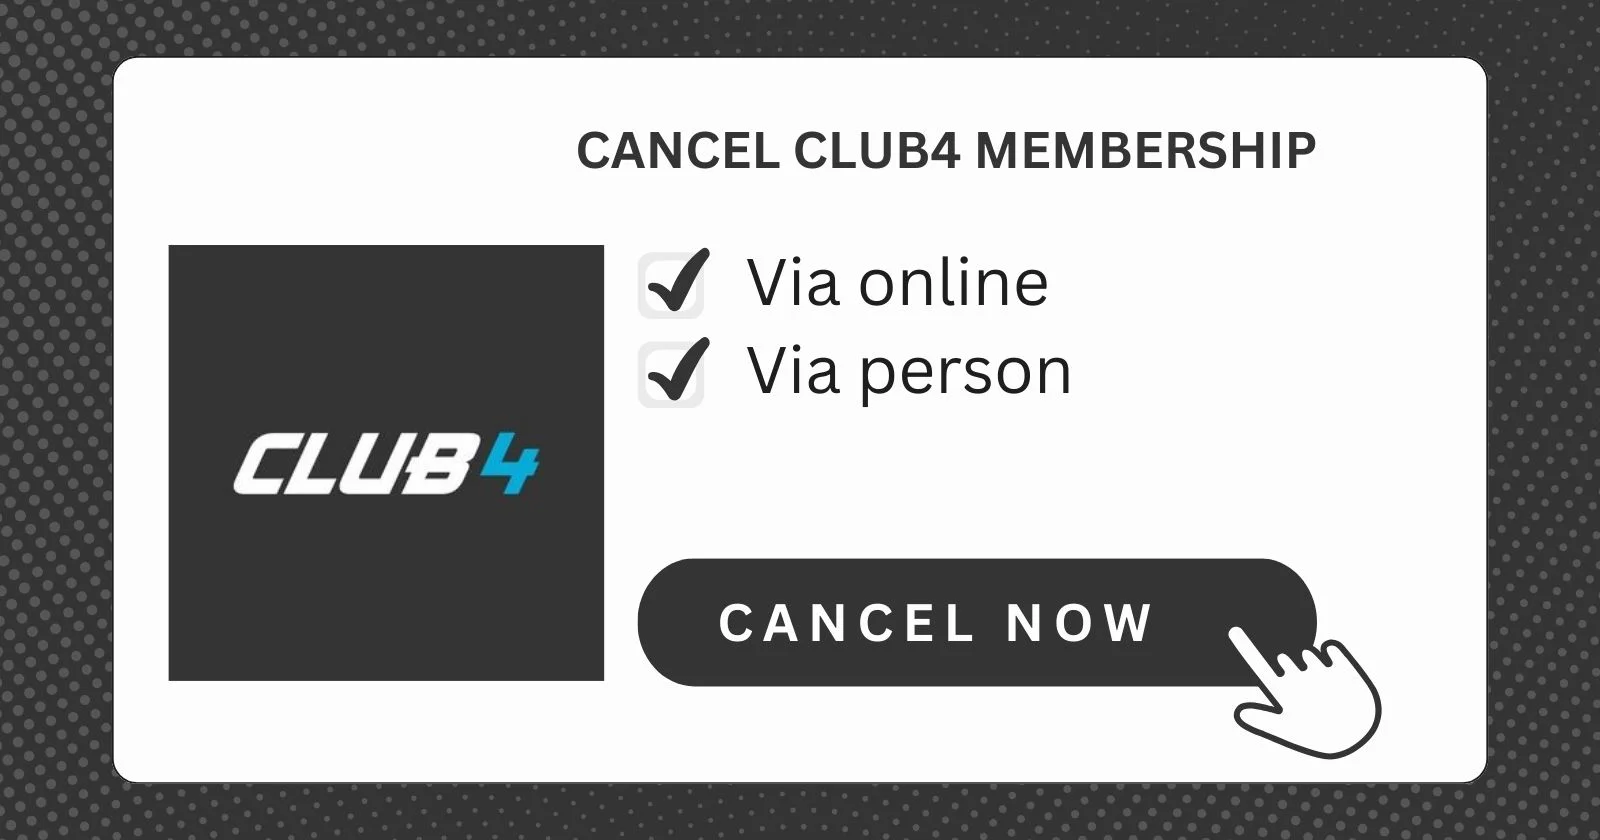 Cancel Club4 Membership